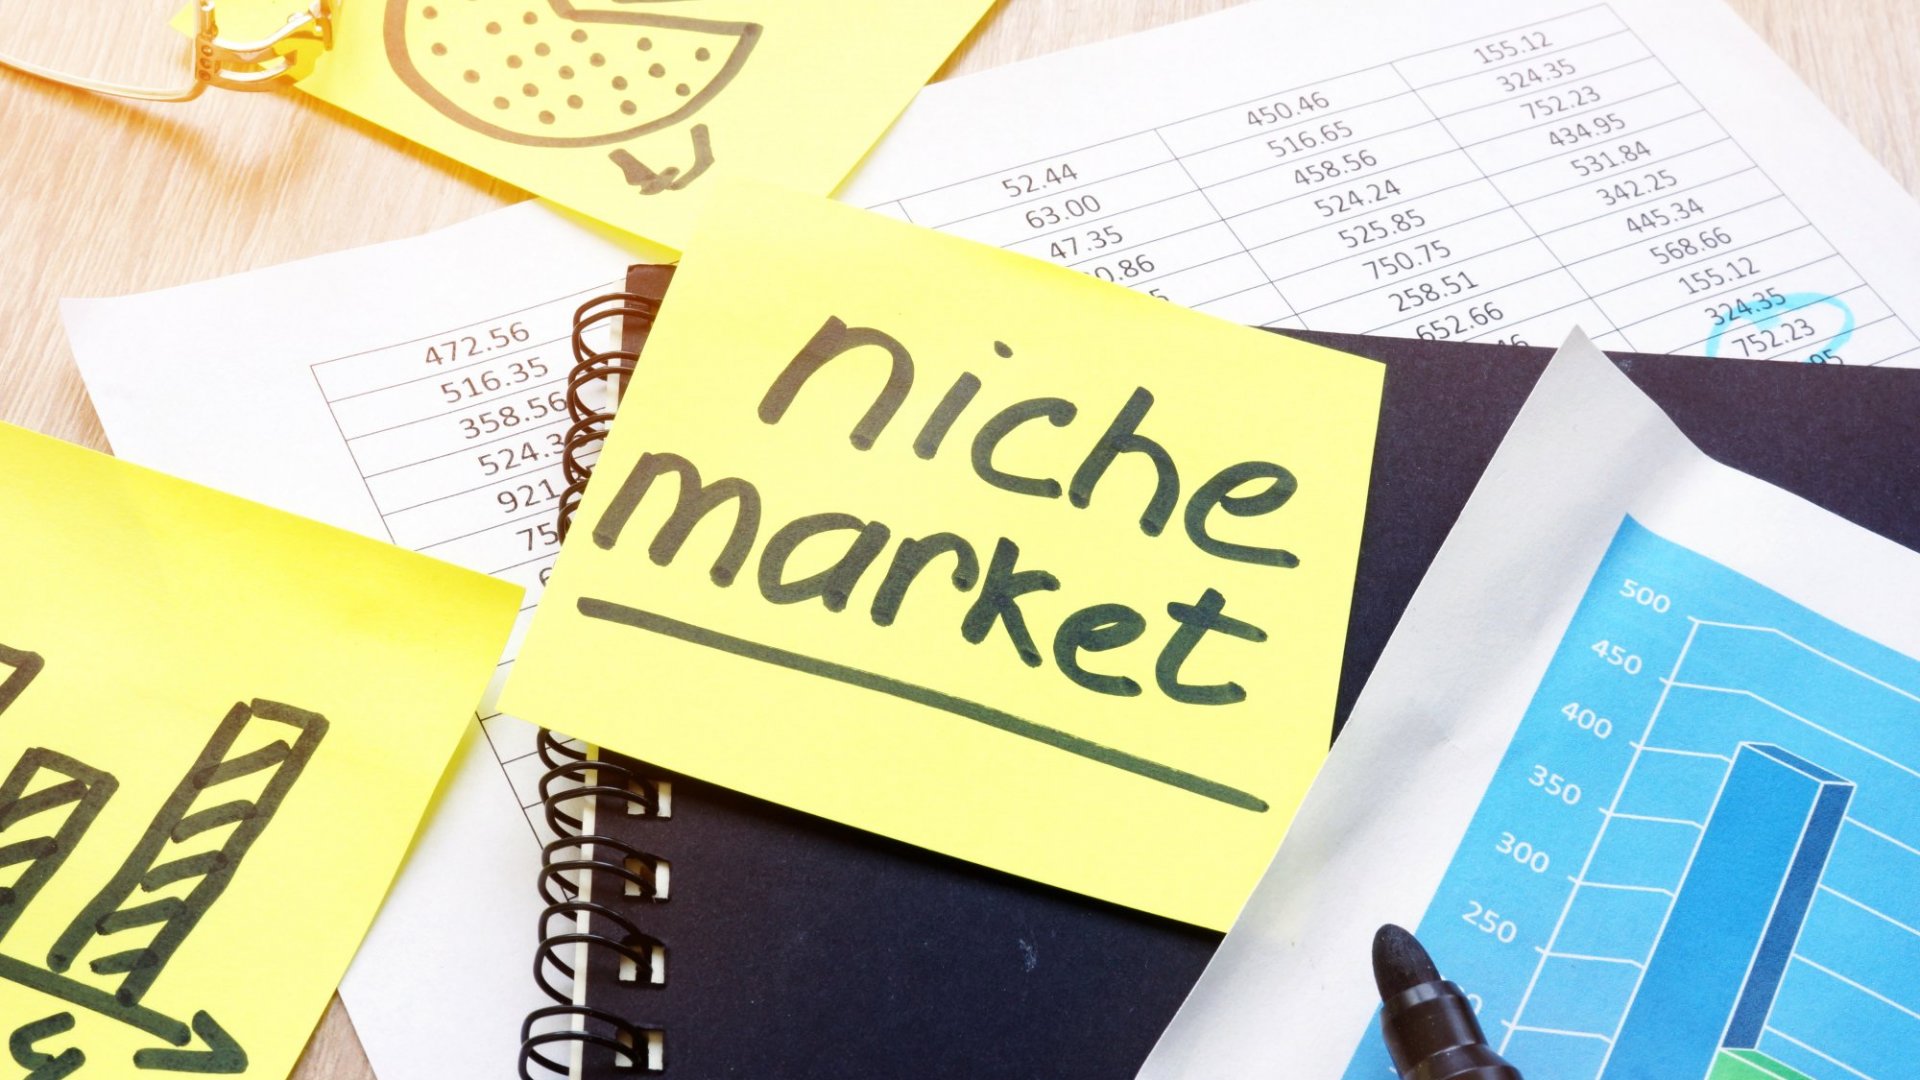 Features of niche markets